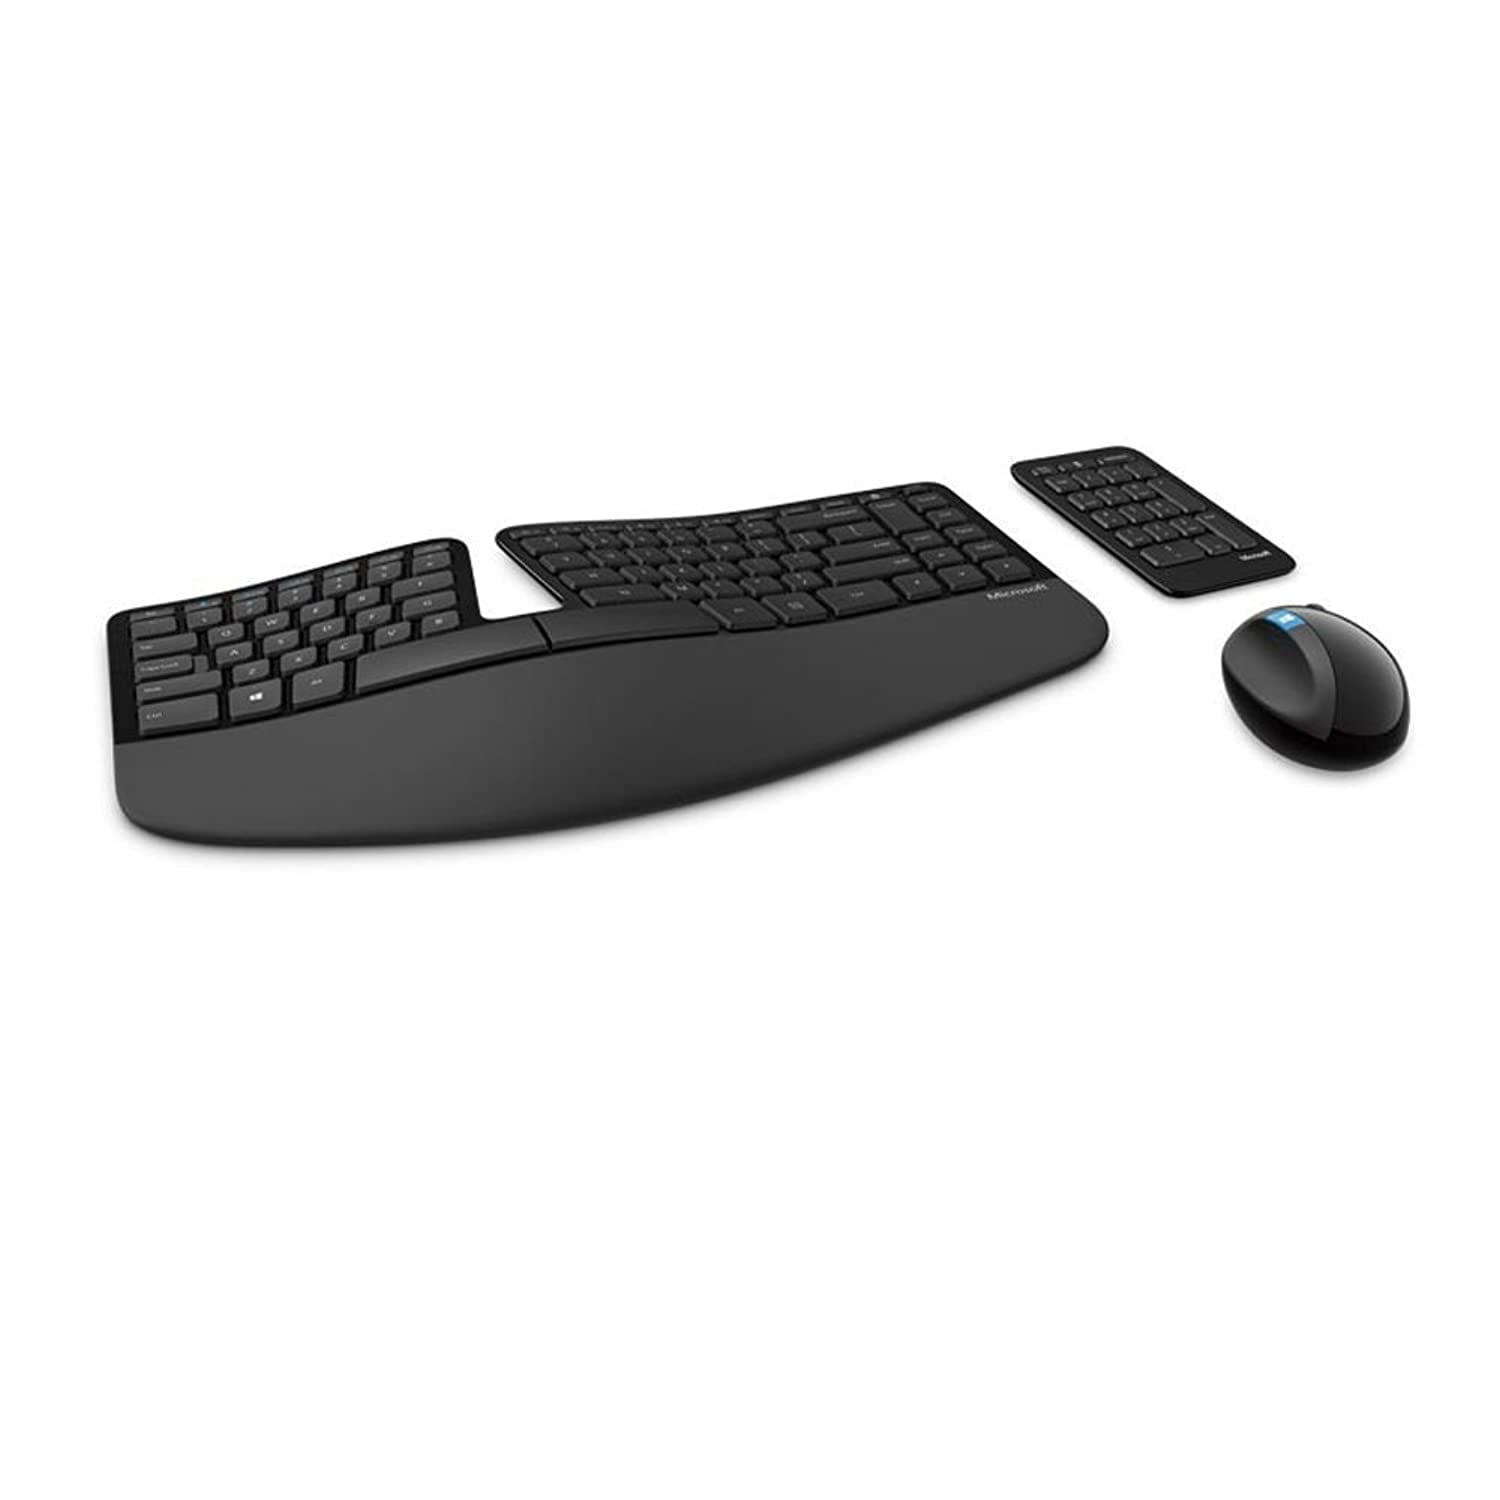 ergonomic keyboard and mouse mac